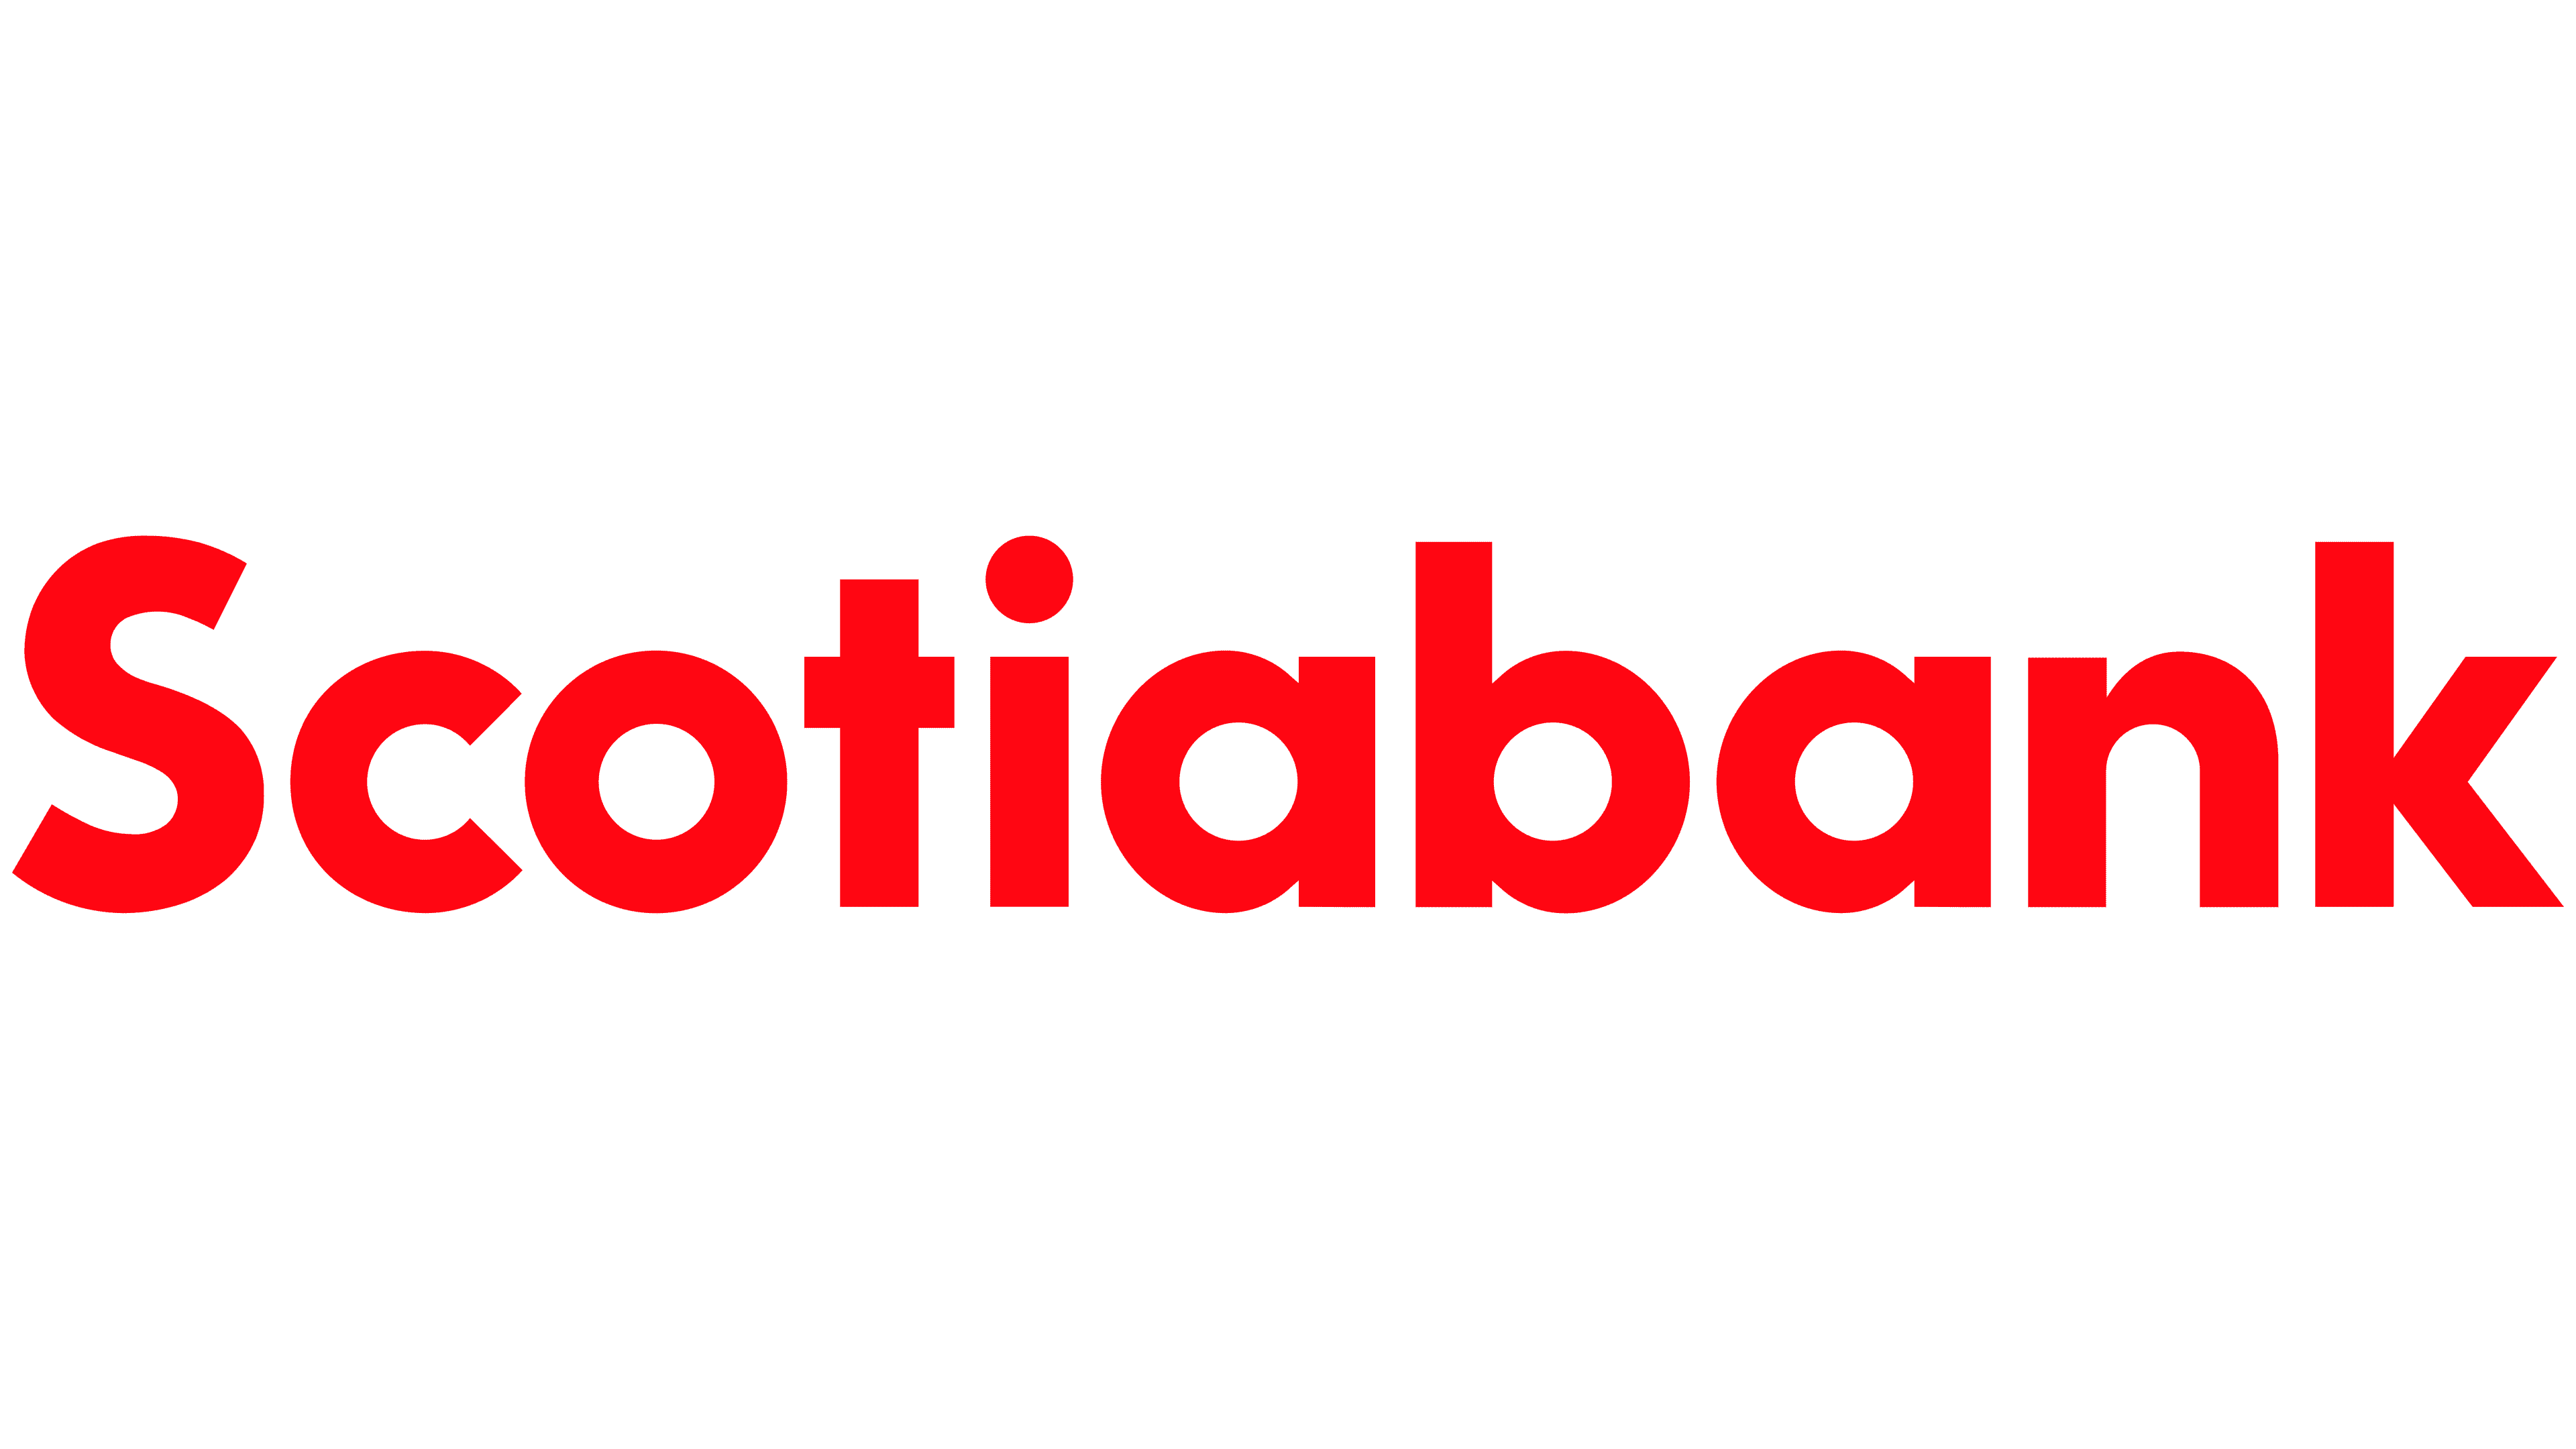 Scotiabank - BankSecrets